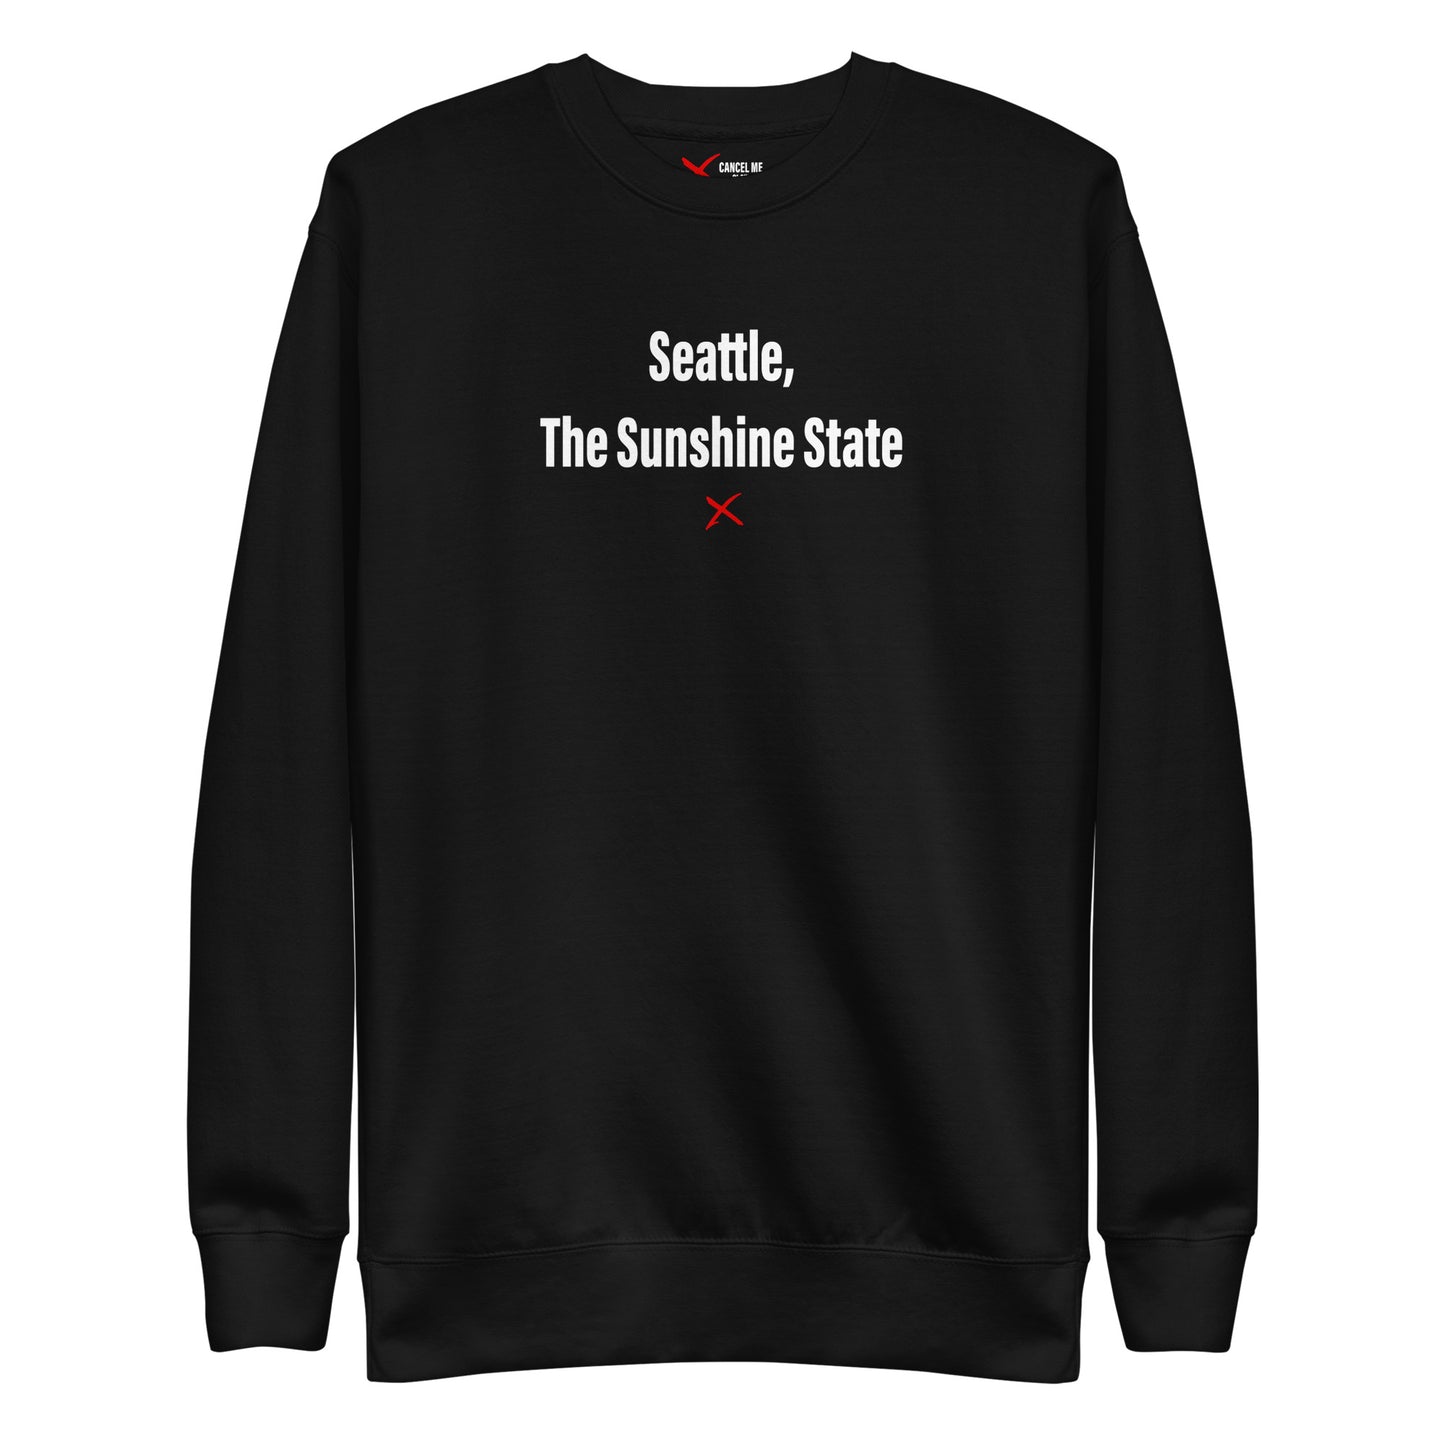 Seattle, The Sunshine State - Sweatshirt